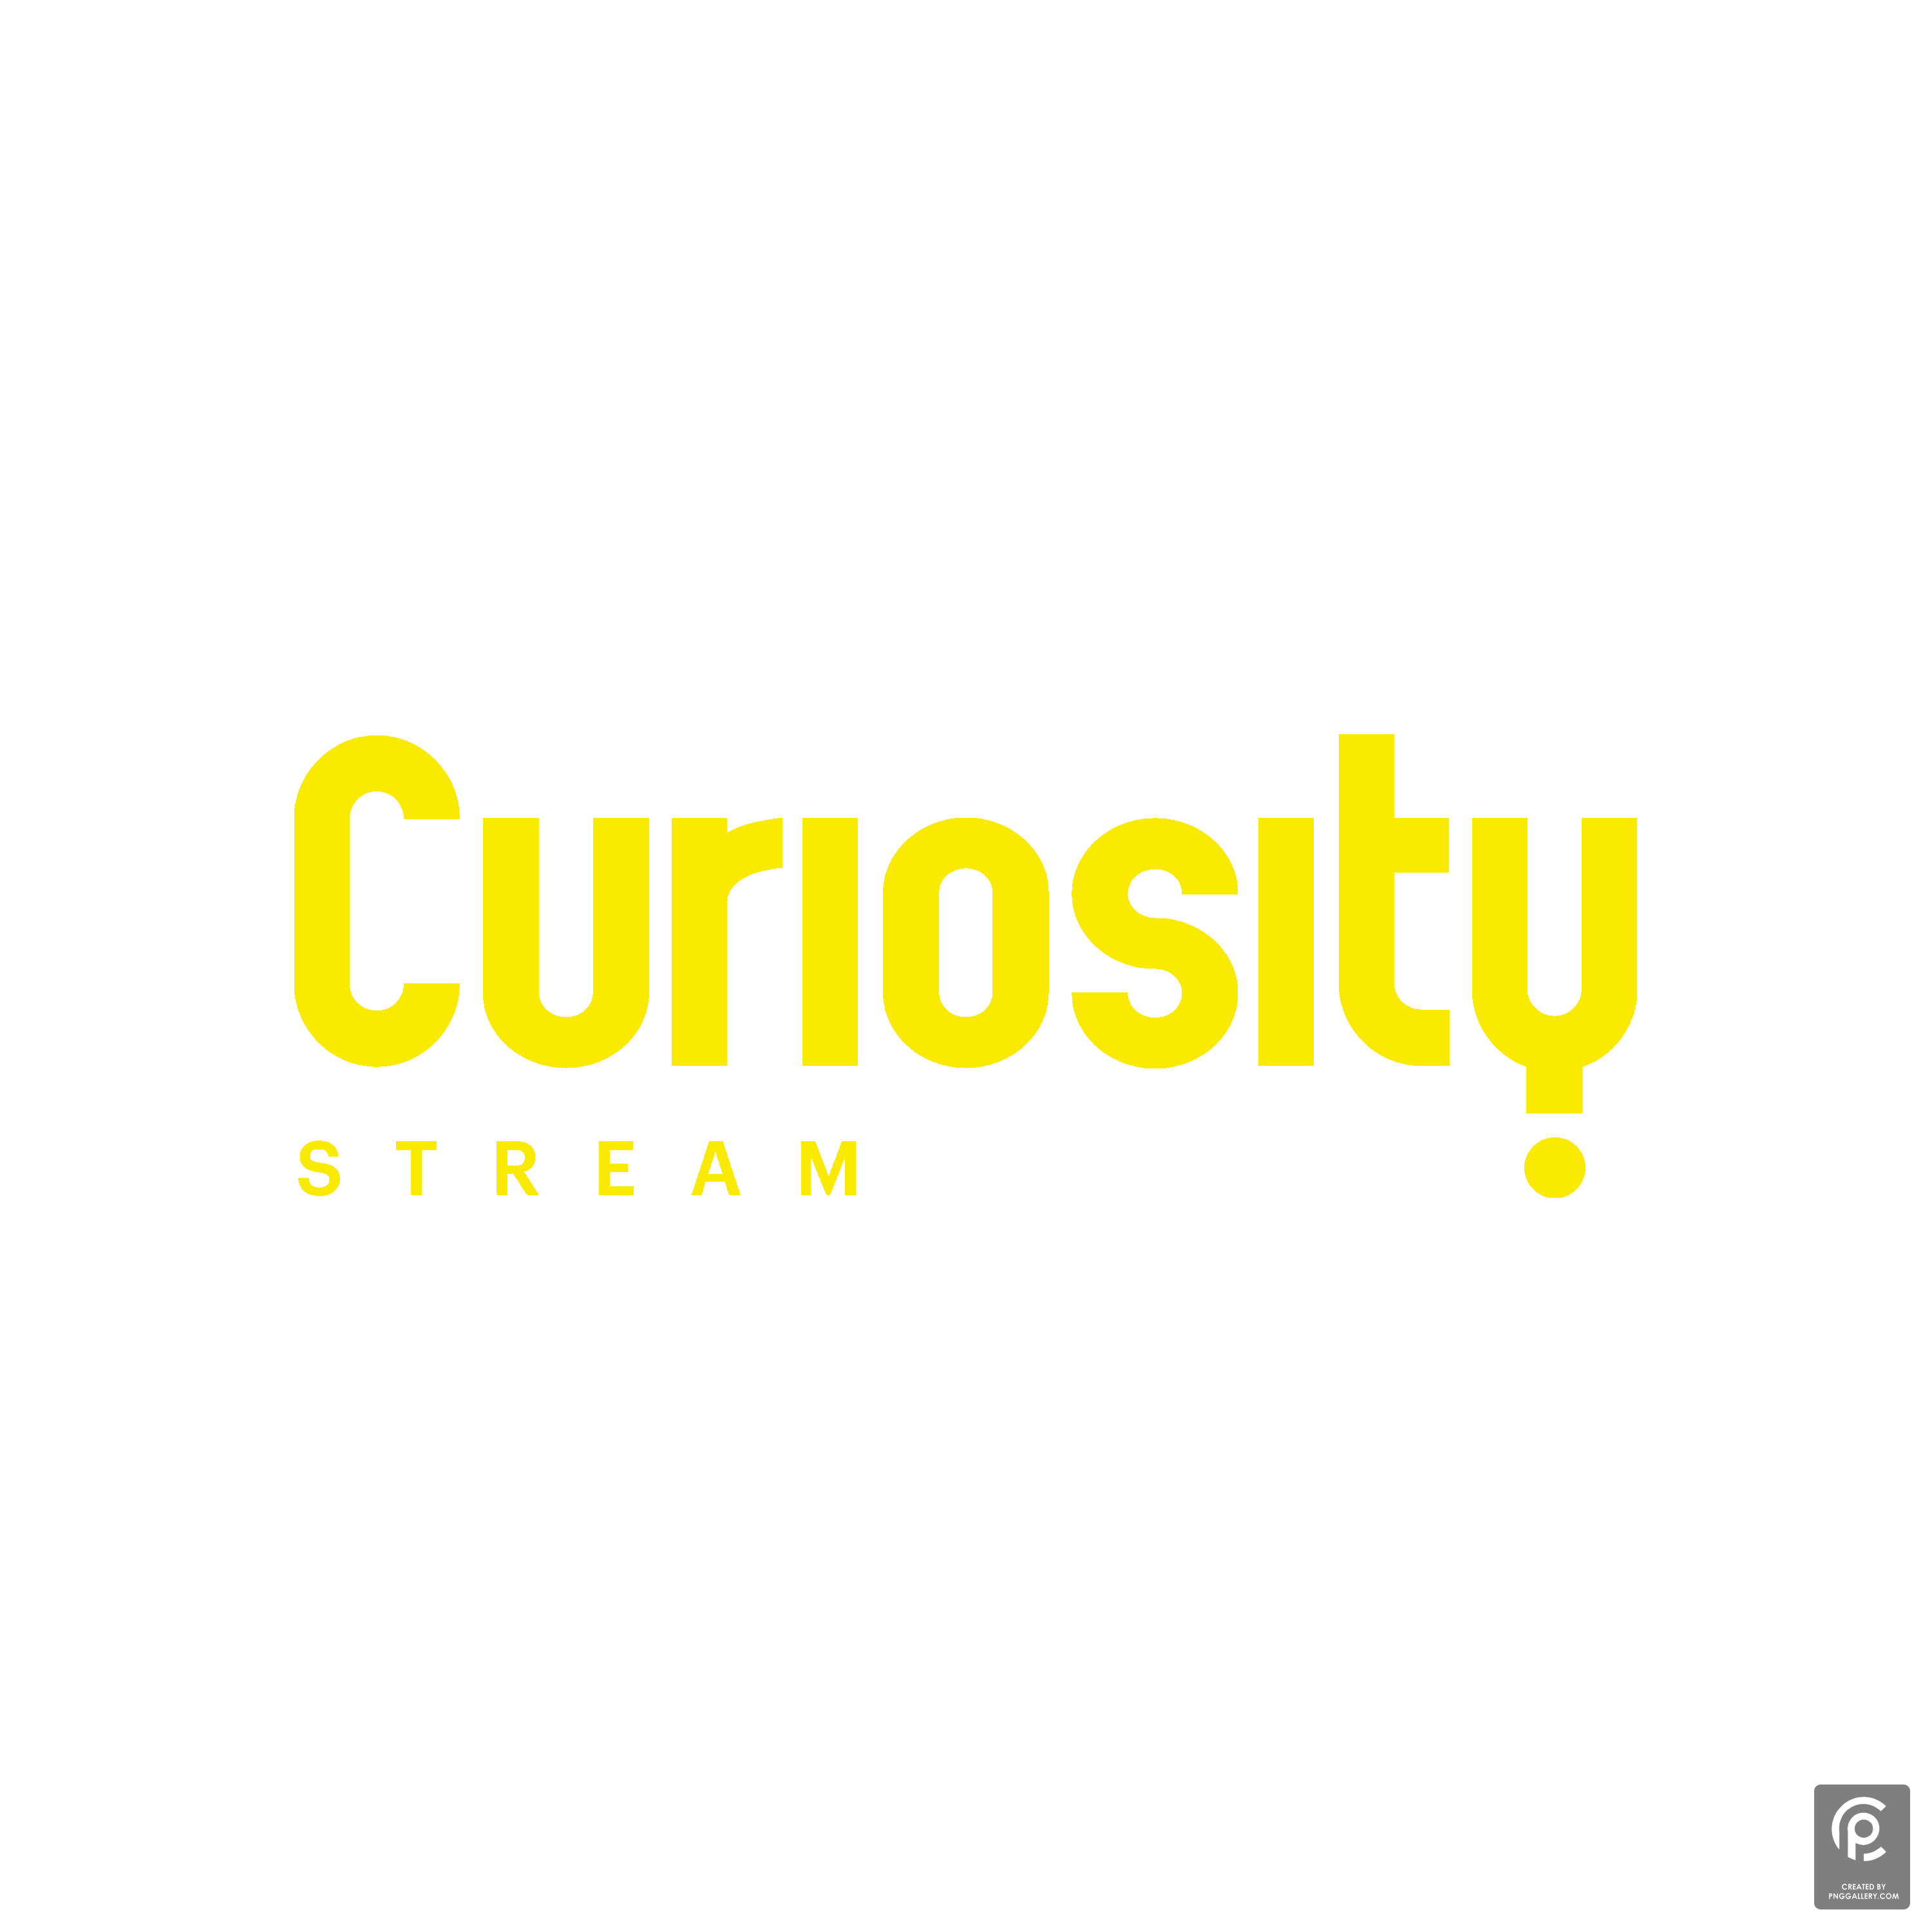 Curiosity Stream Logo Transparent Gallery